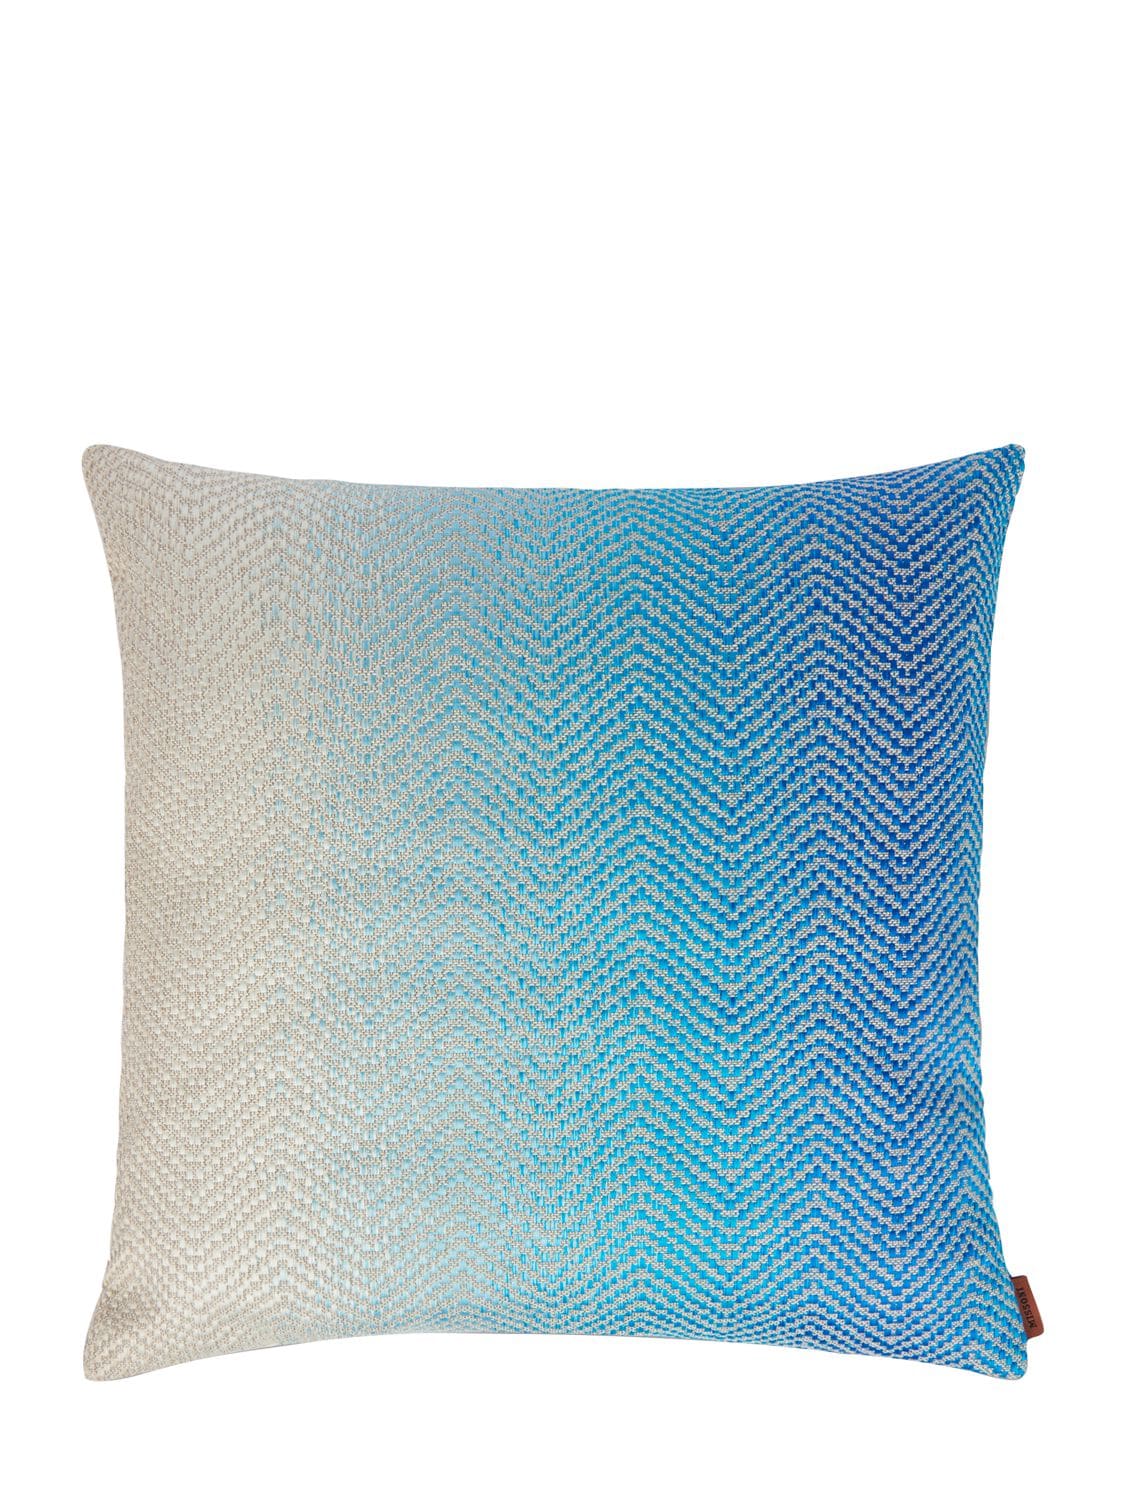 Missoni Home Collection Scia Cushion In Blue